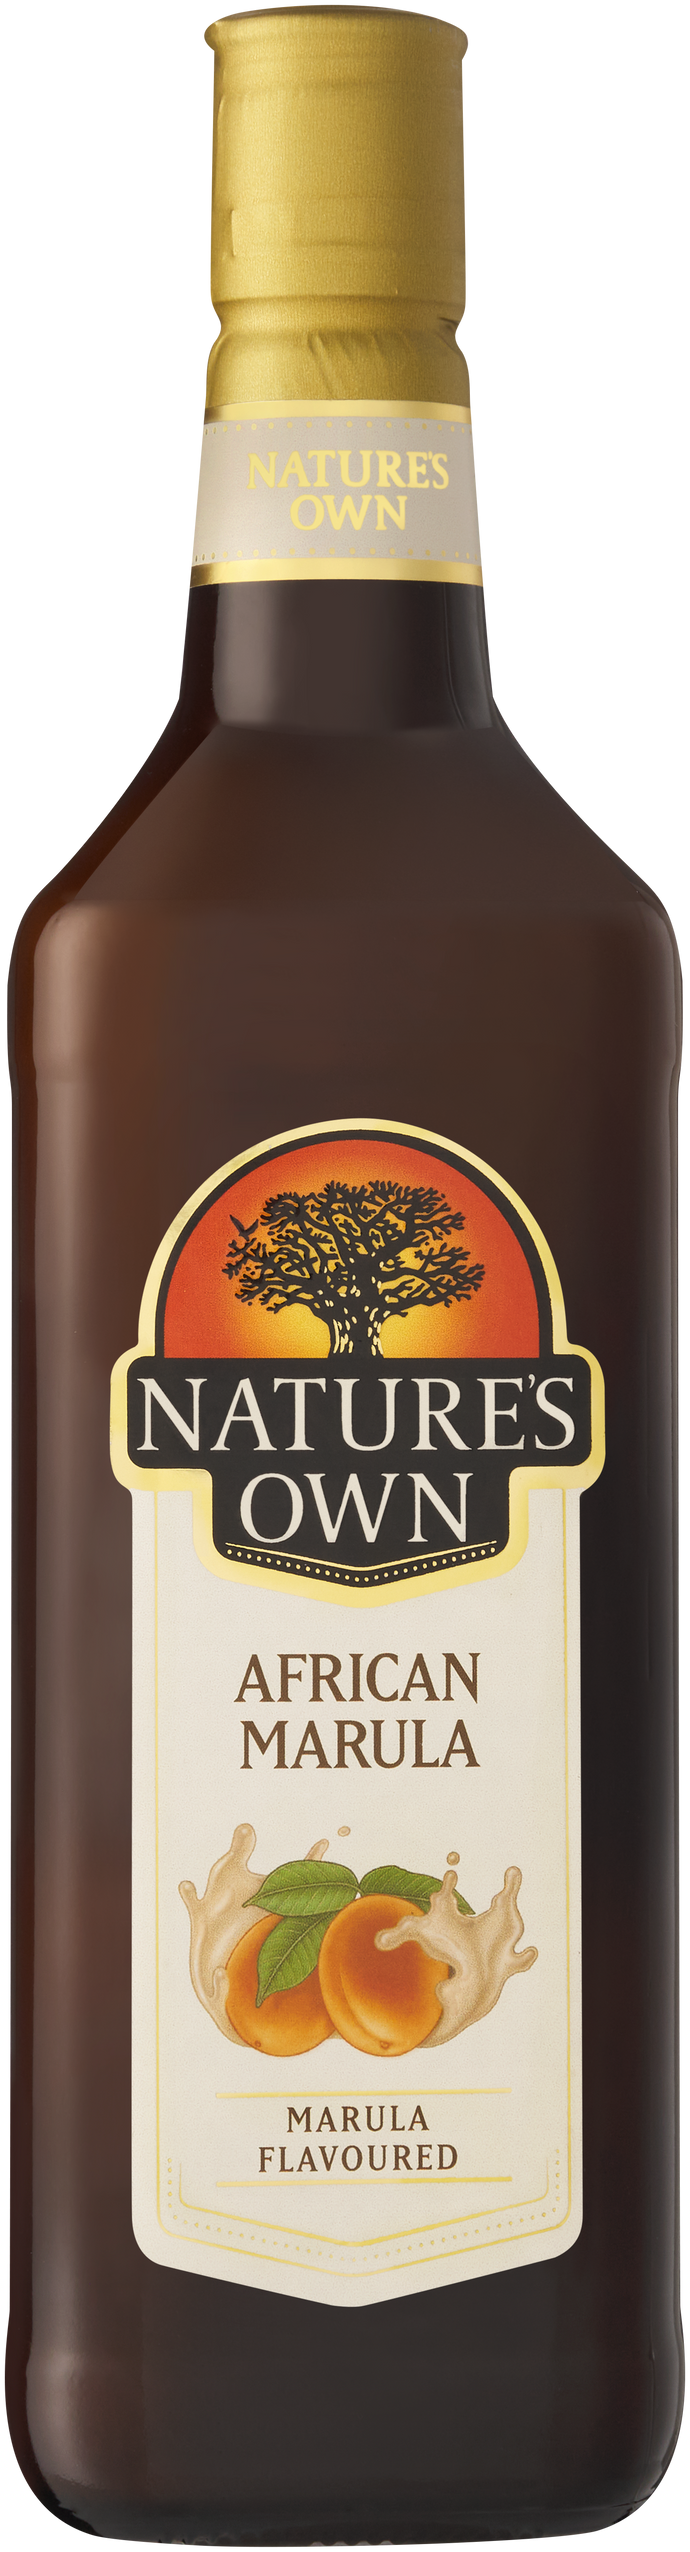 Nature's Own African Marula Cream Liqueur